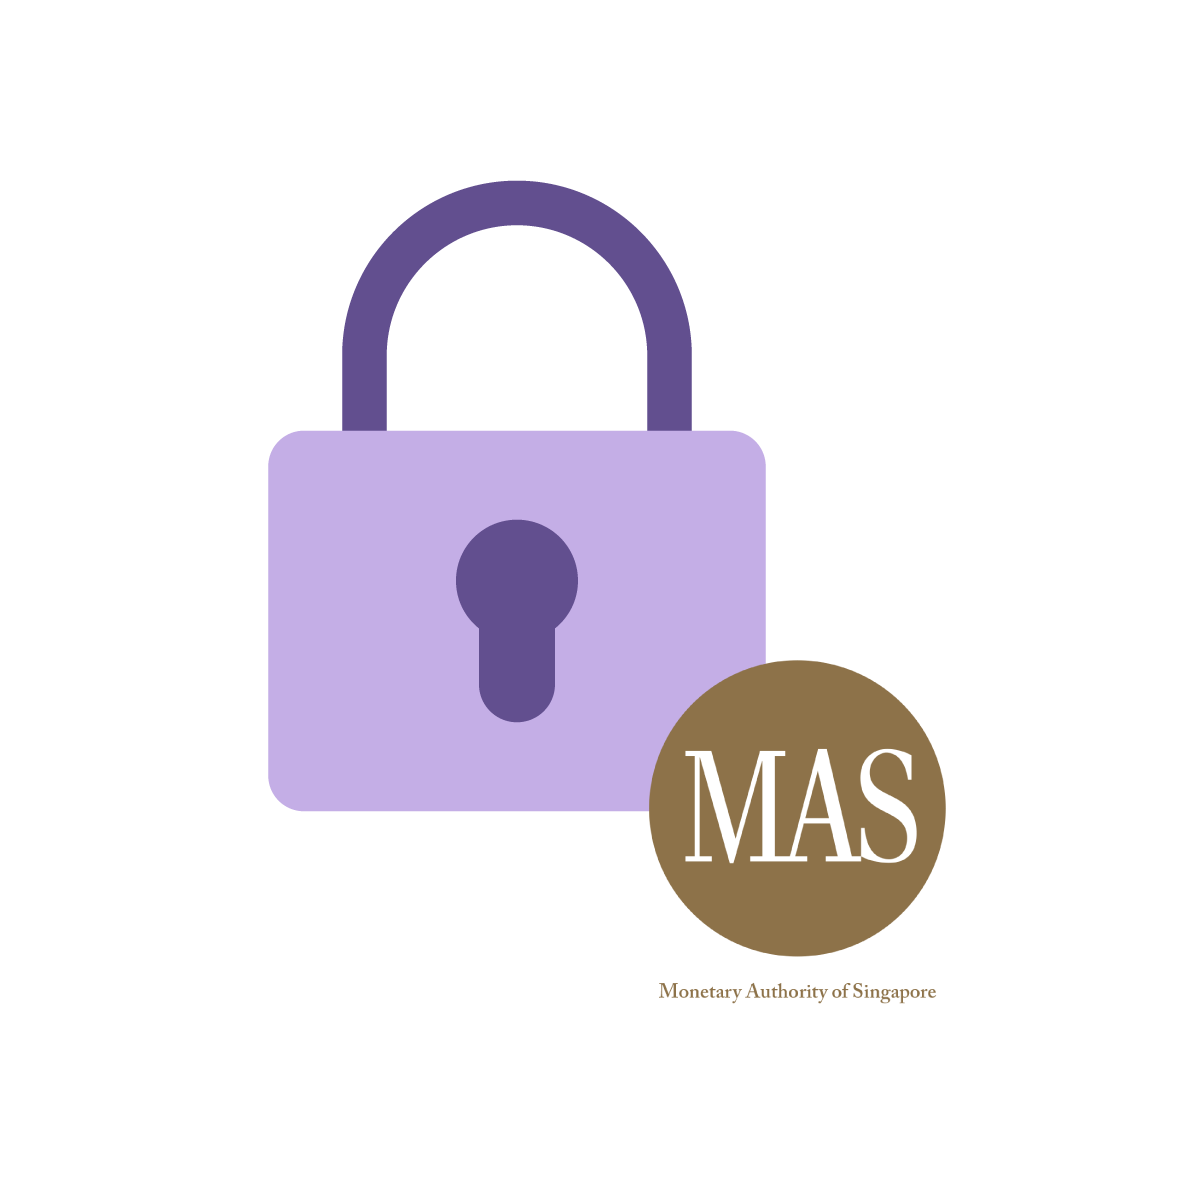 Icon of lock and MAS logo